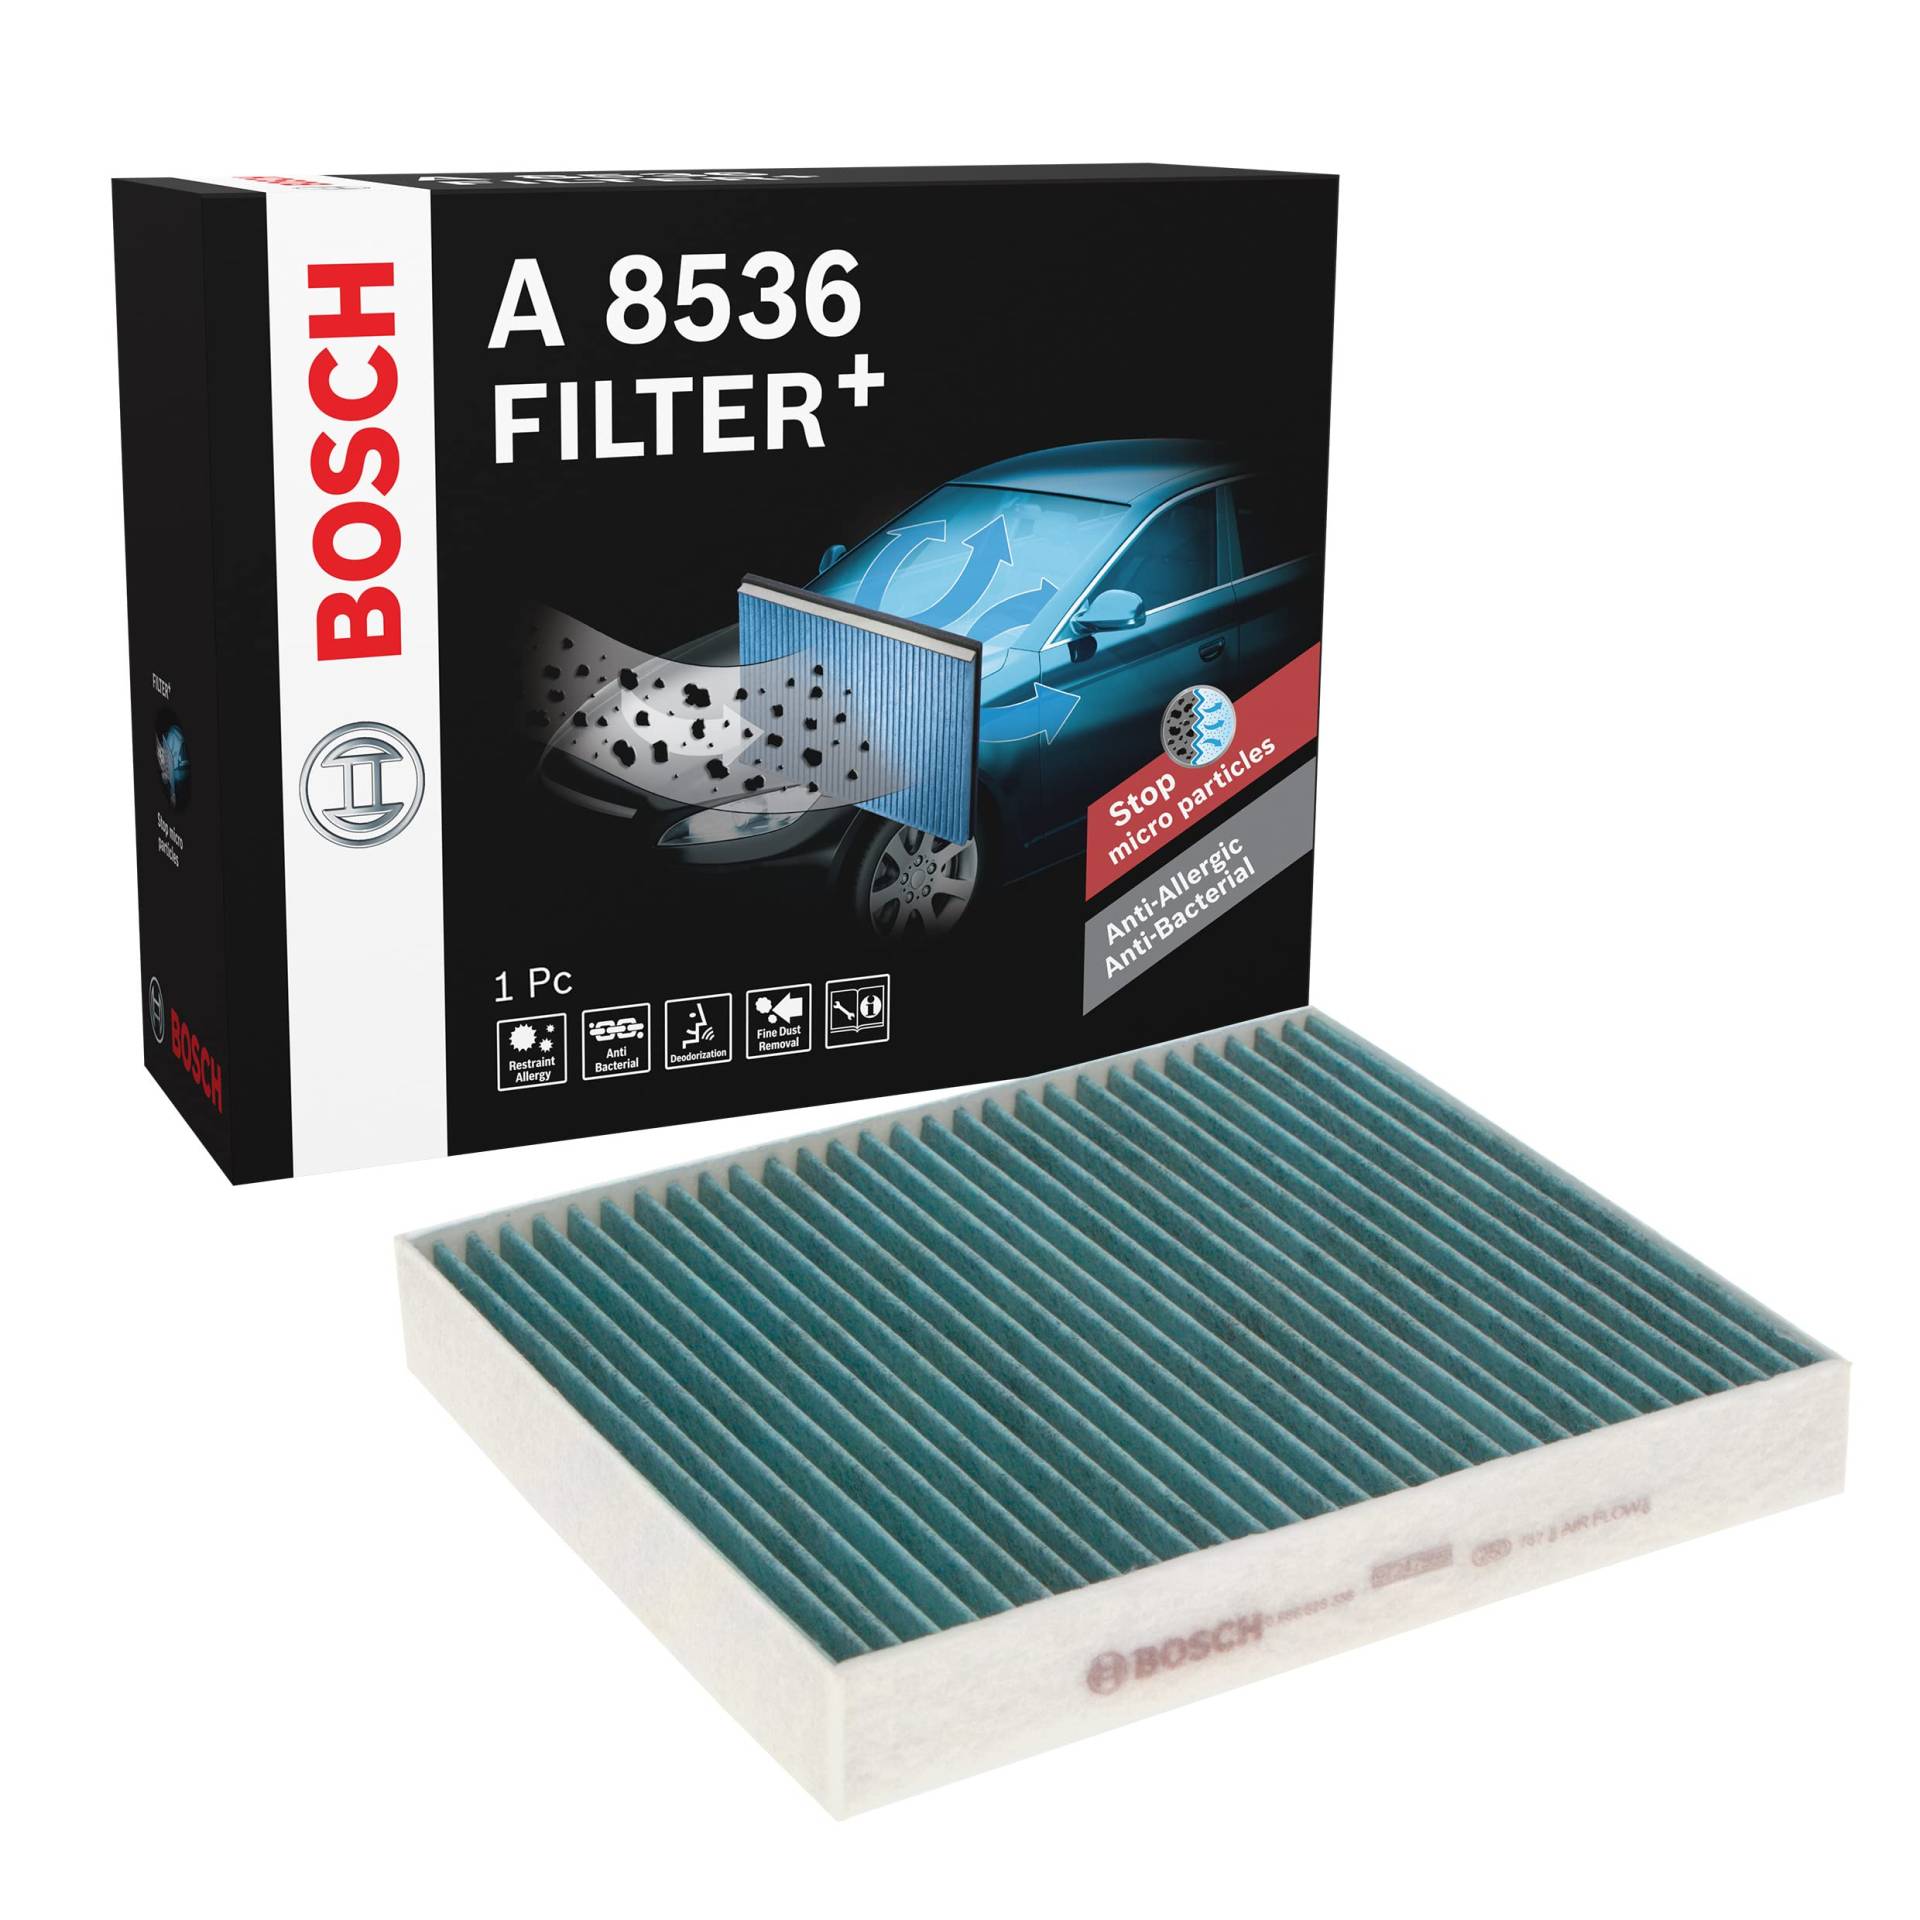 Bosch A8536 - Innenraumfilter Filter+ von Bosch Automotive